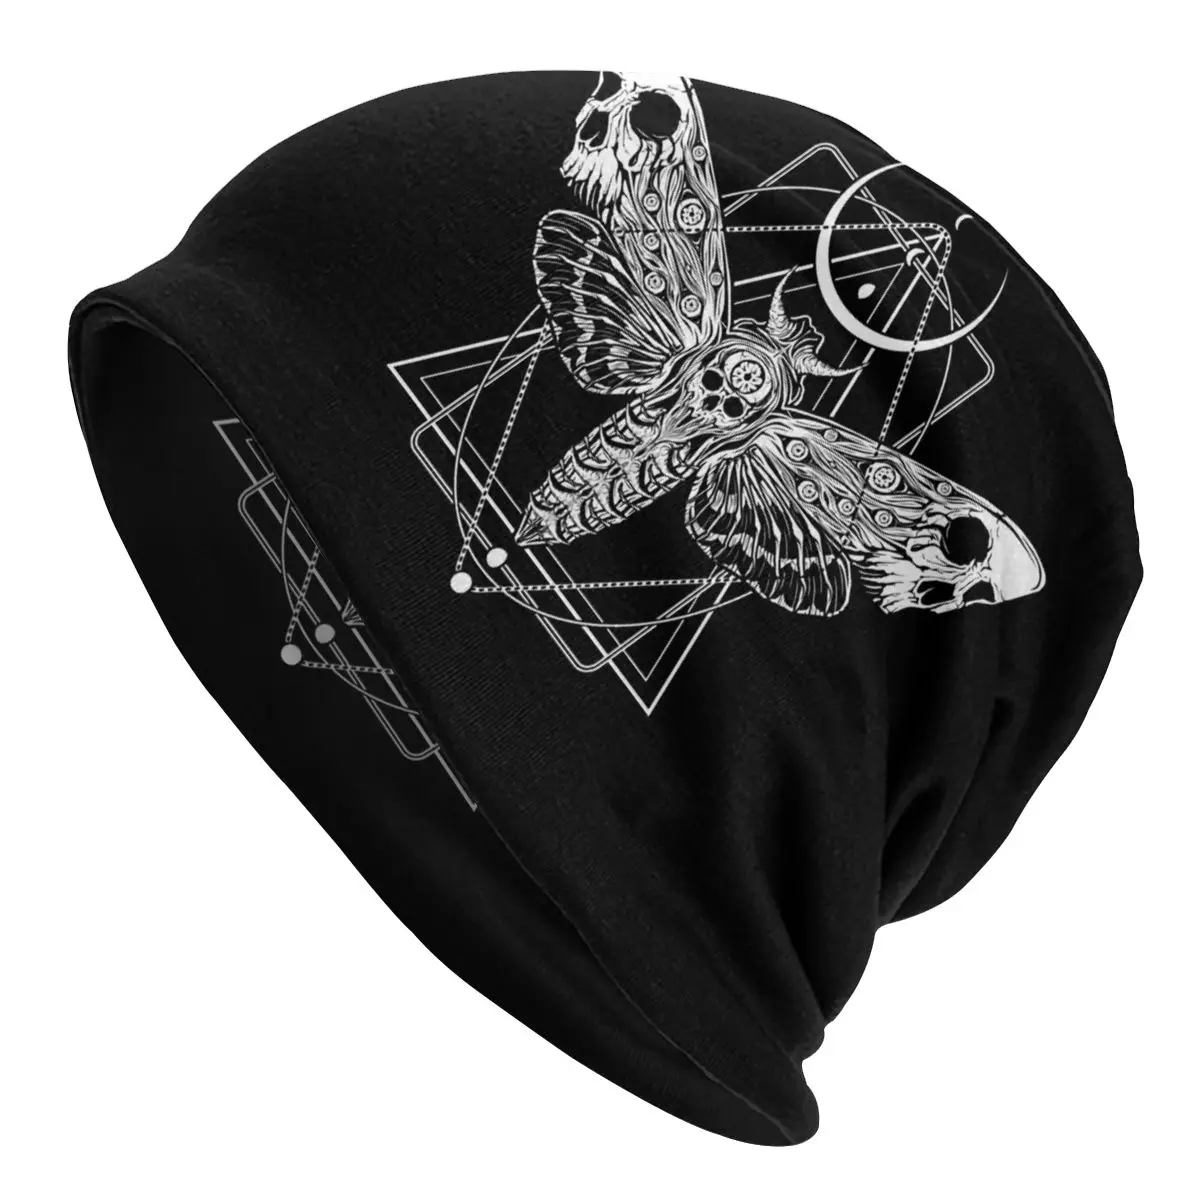 

Surreal Death Moth Bonnet Beanie Knit Hats Men Hip Hop Unisex Adult Gothic Sacred Geometry Warm Winter Skullies Beanies Caps 1